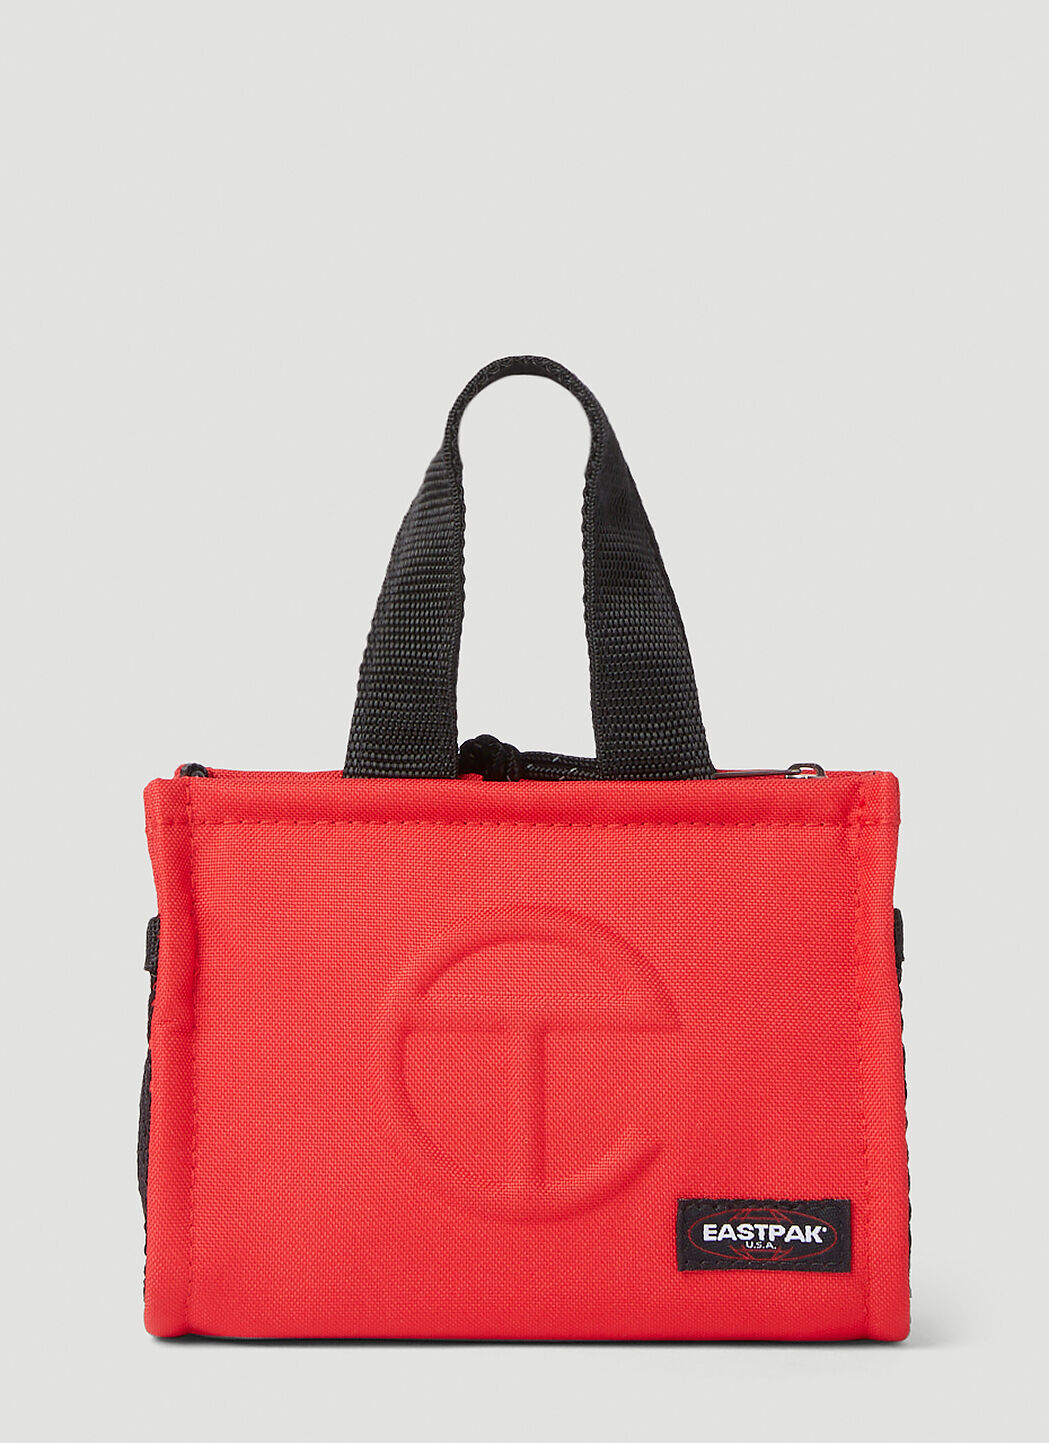 Eastpak x Telfar Shopper Small Crossbody Bag 红色 est0353019